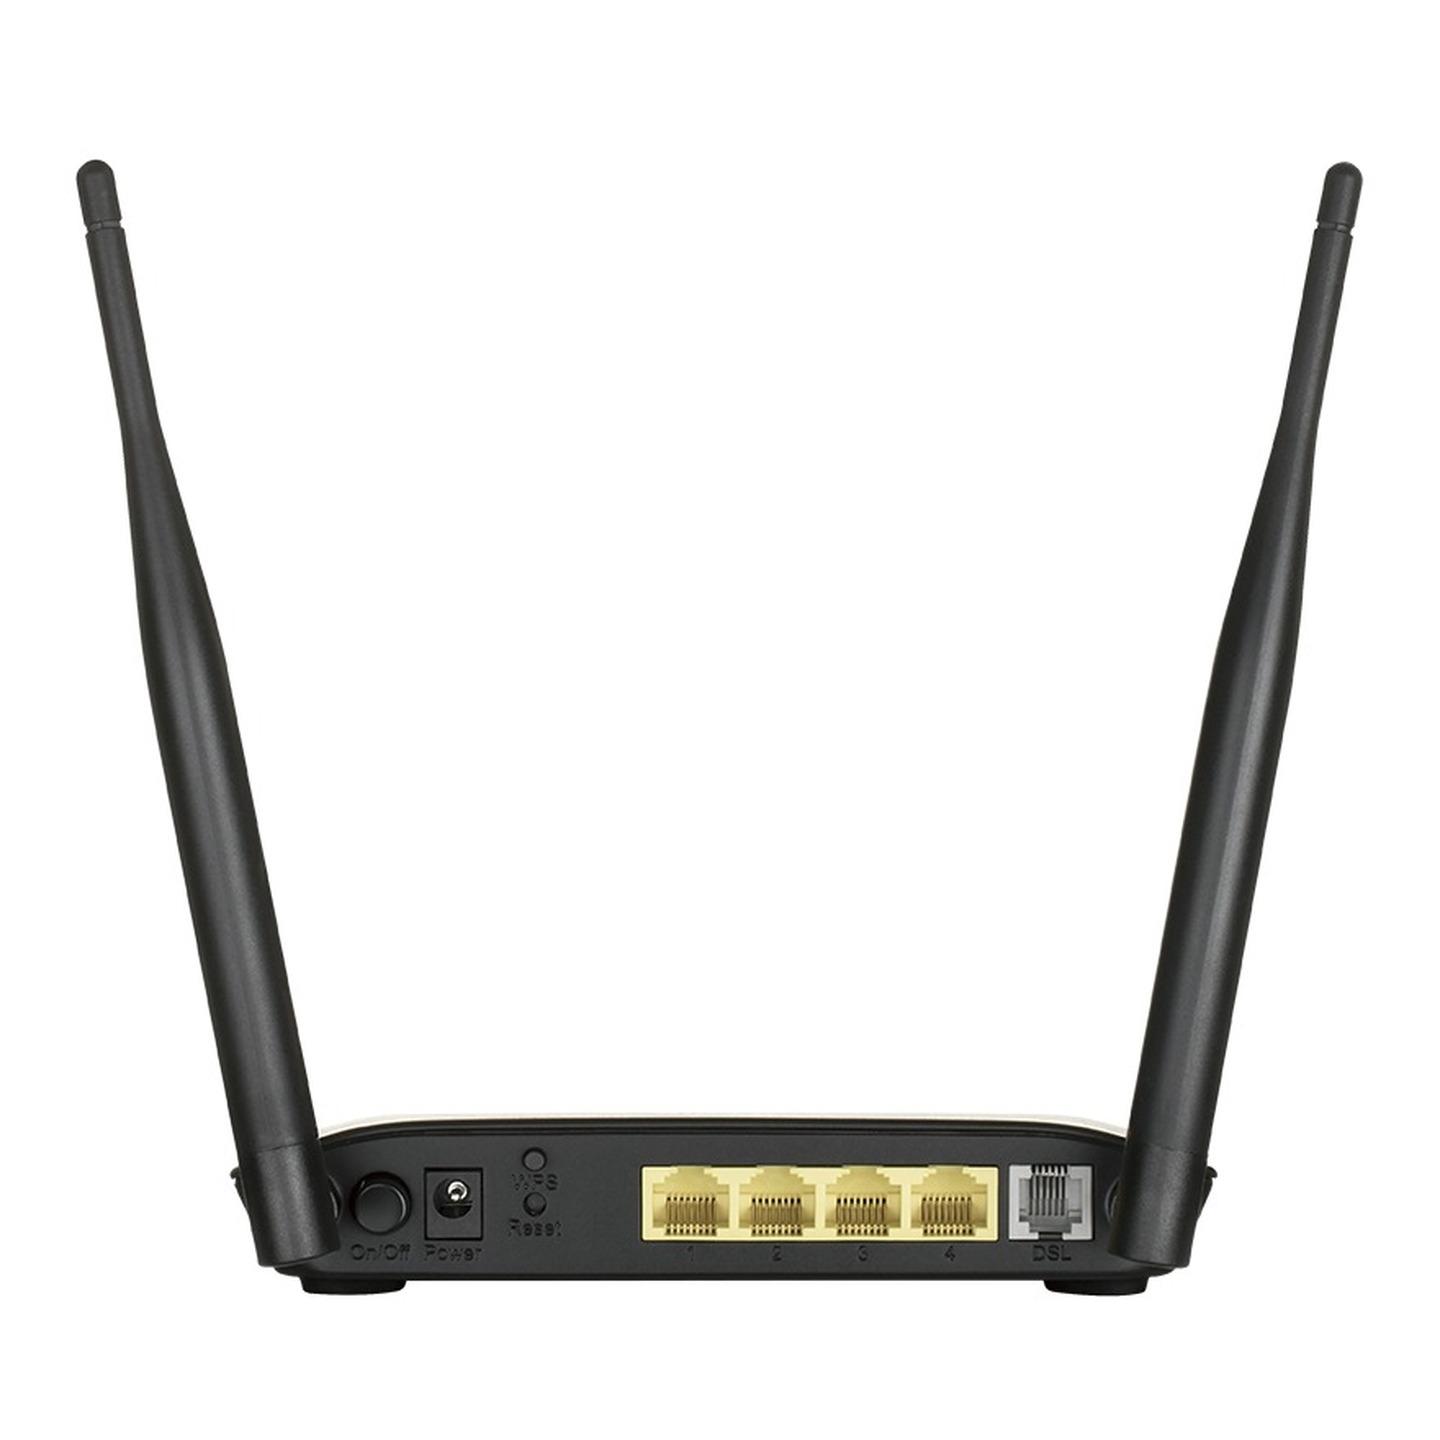 D-Link DSL-2740M Wireless N300 ADSL2 Modem Router